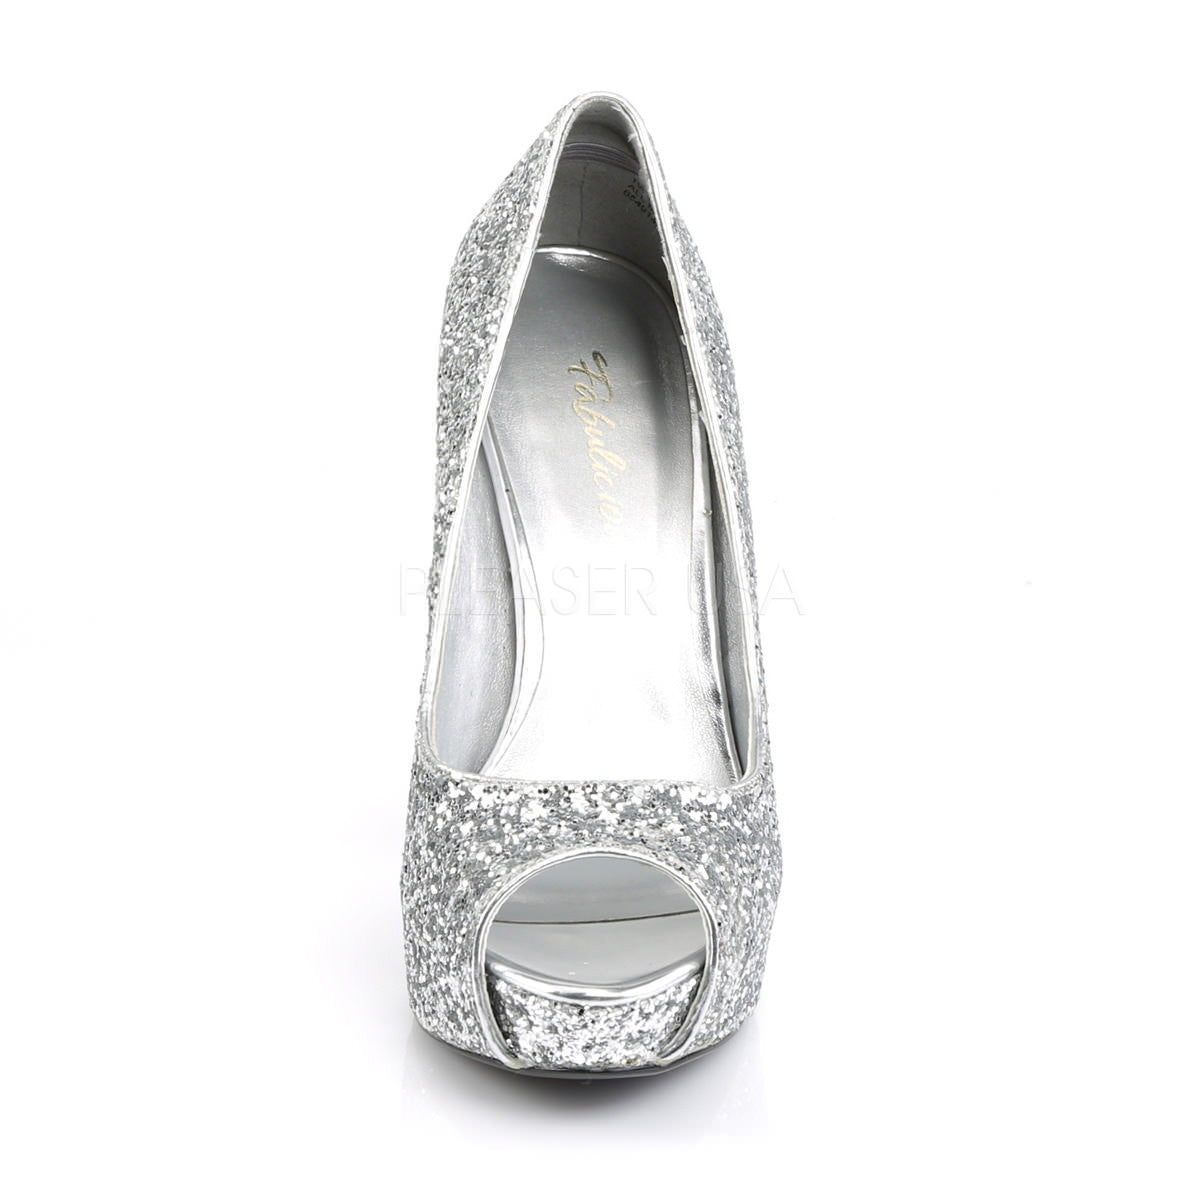 FABULICIOUS TWINKLE-18G Silver Glitter Peep Toe Pumps – Shoecup.com